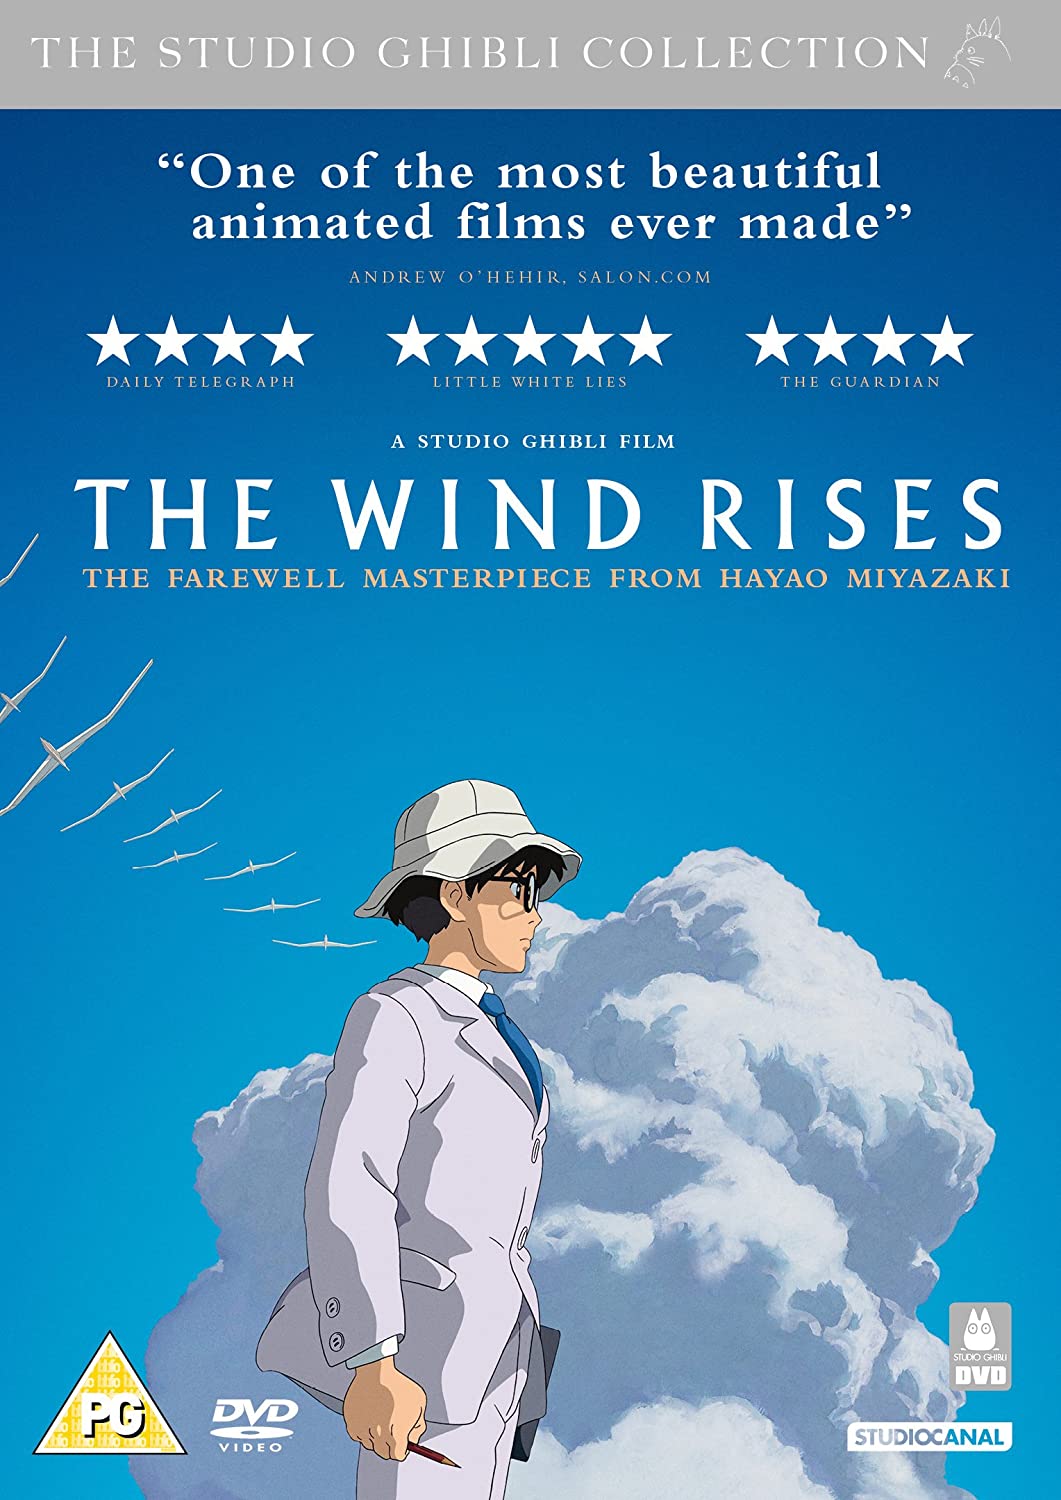 The Wind Rises [DVD]